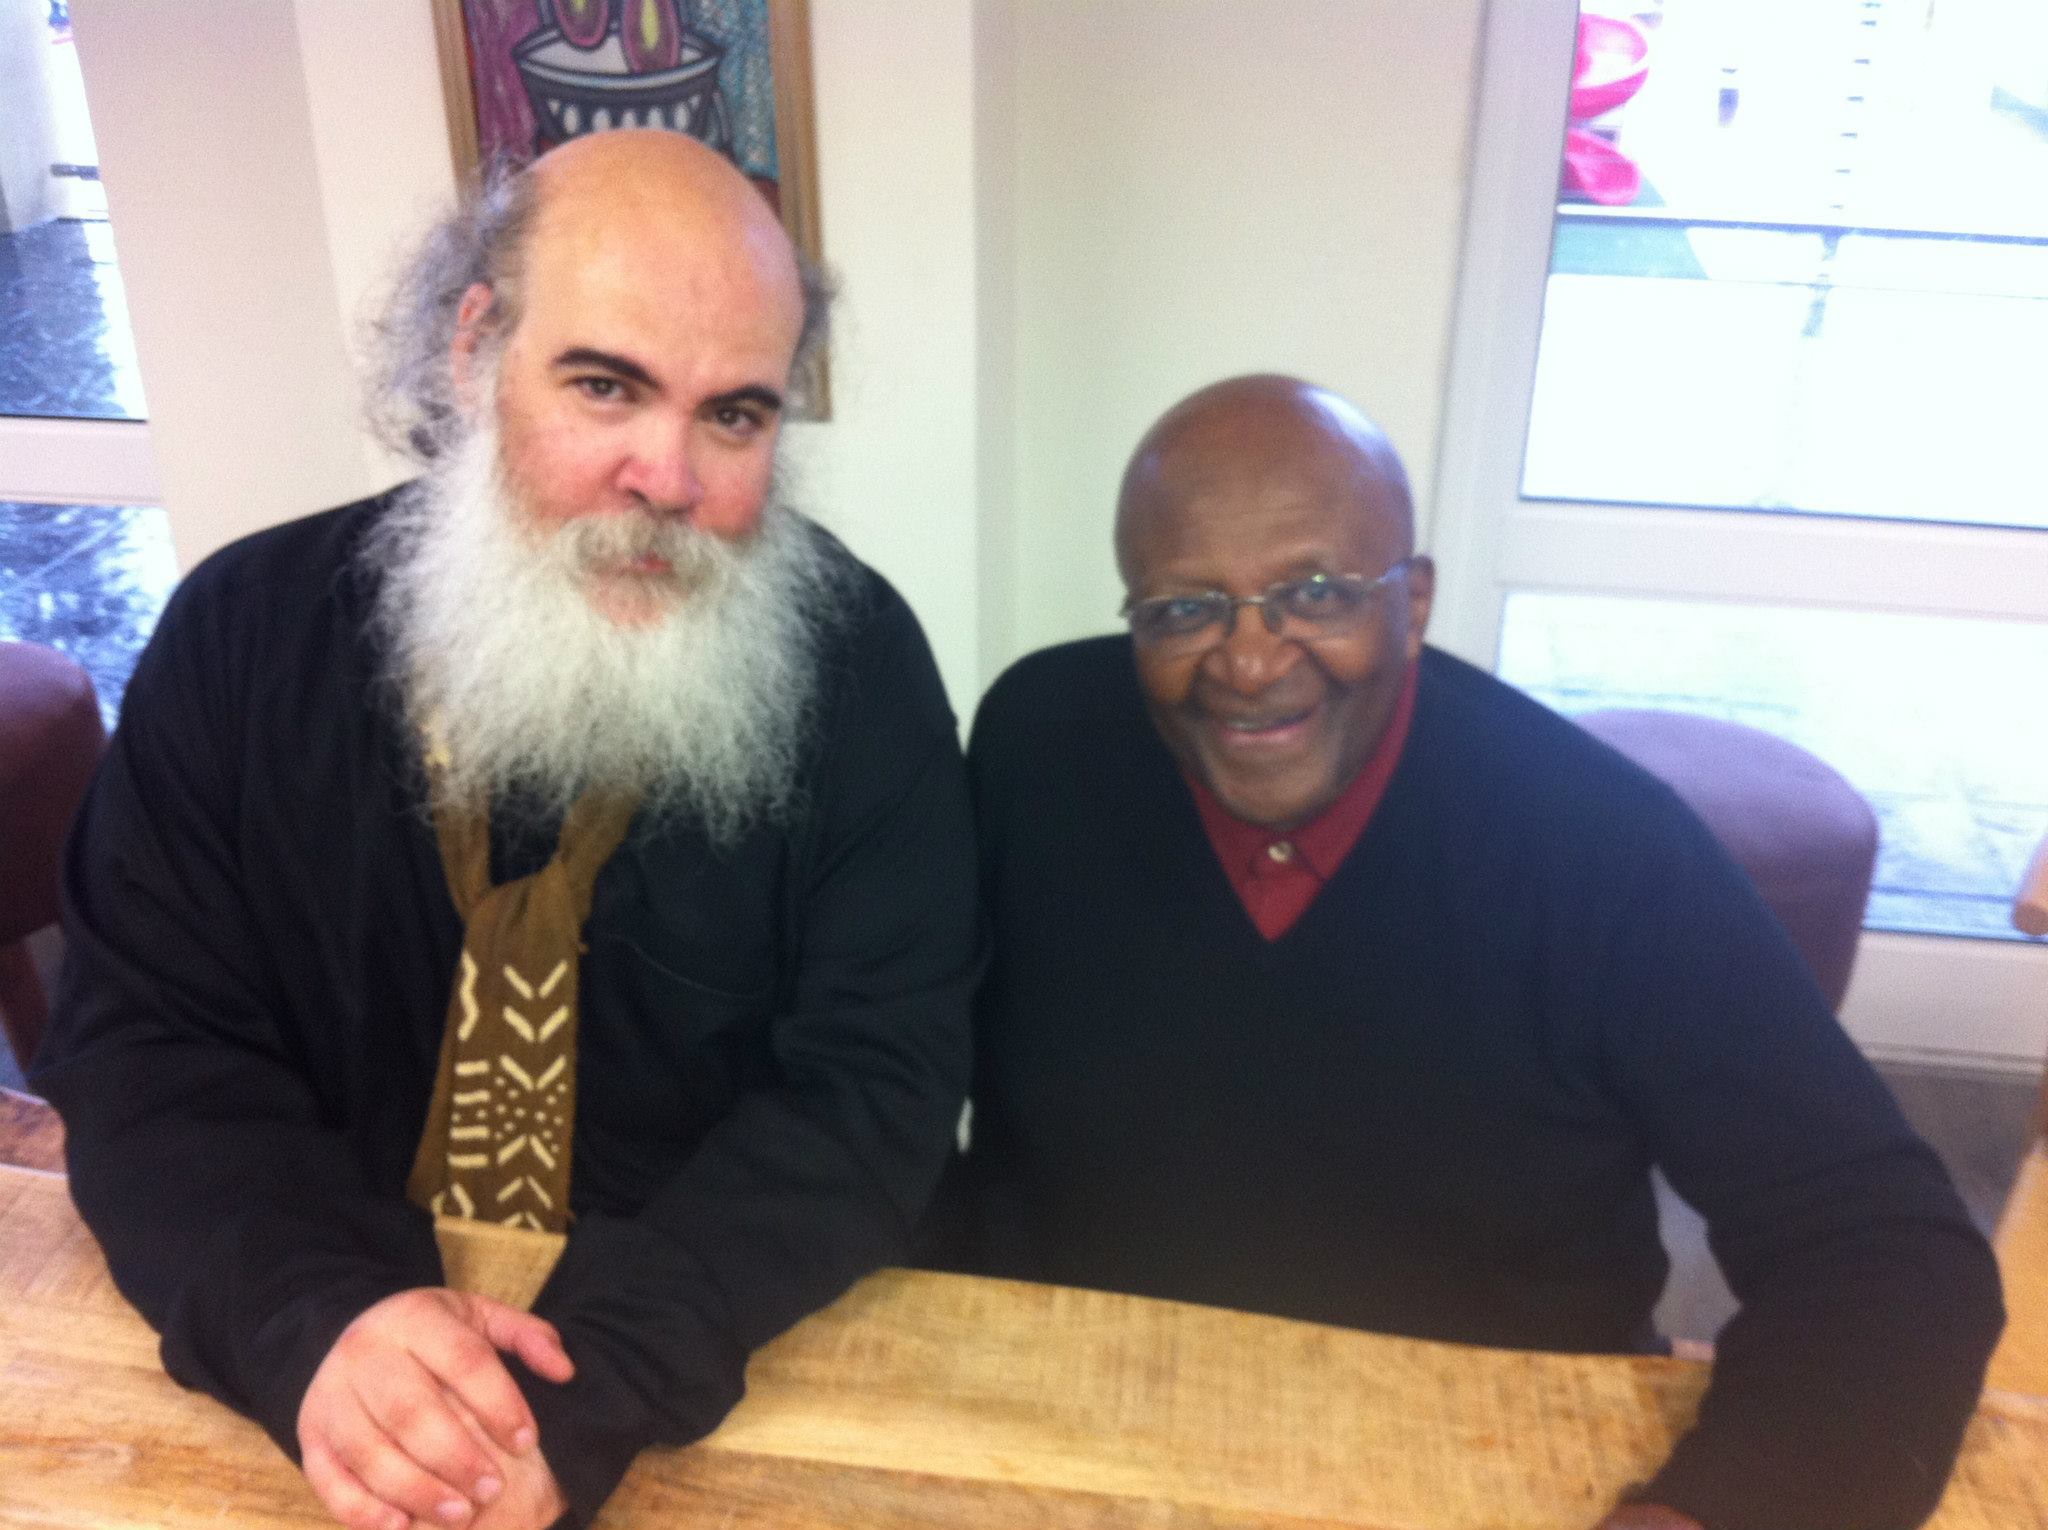 Matt Meyer and Desmond Tutu